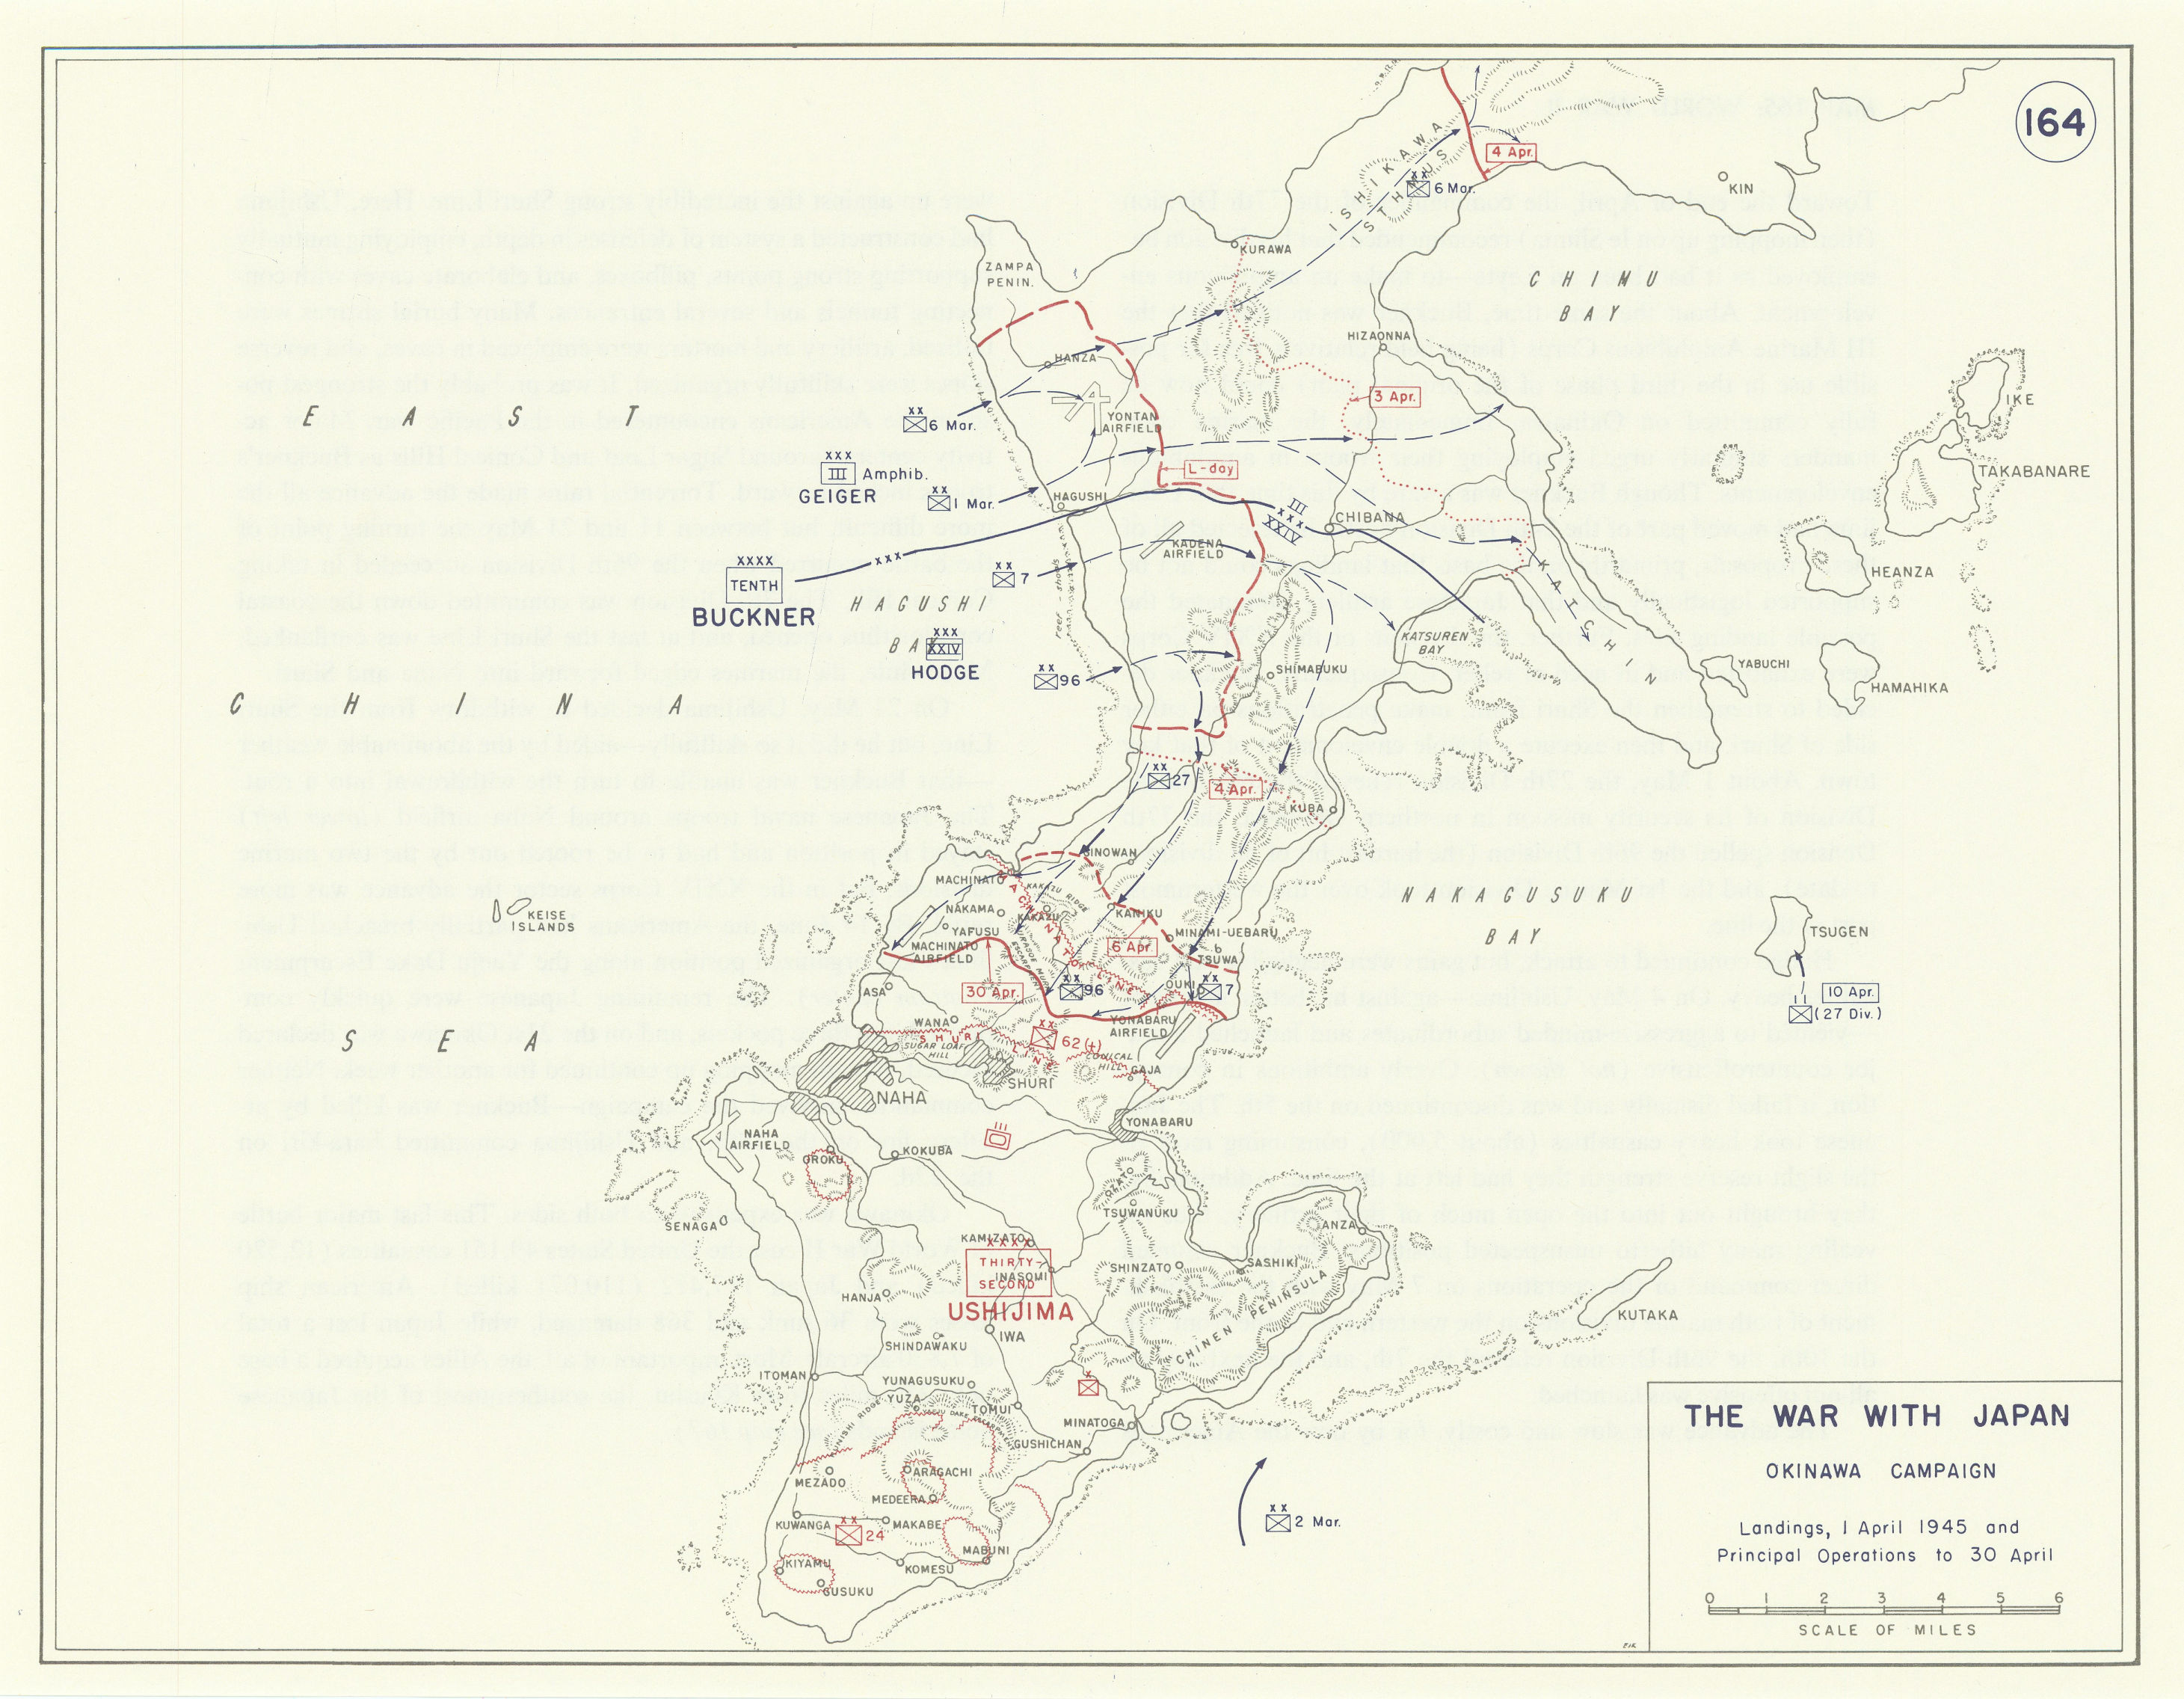 World War 2. Japan. Okinawa Campaign. April 1945 landings & operations 1959 map